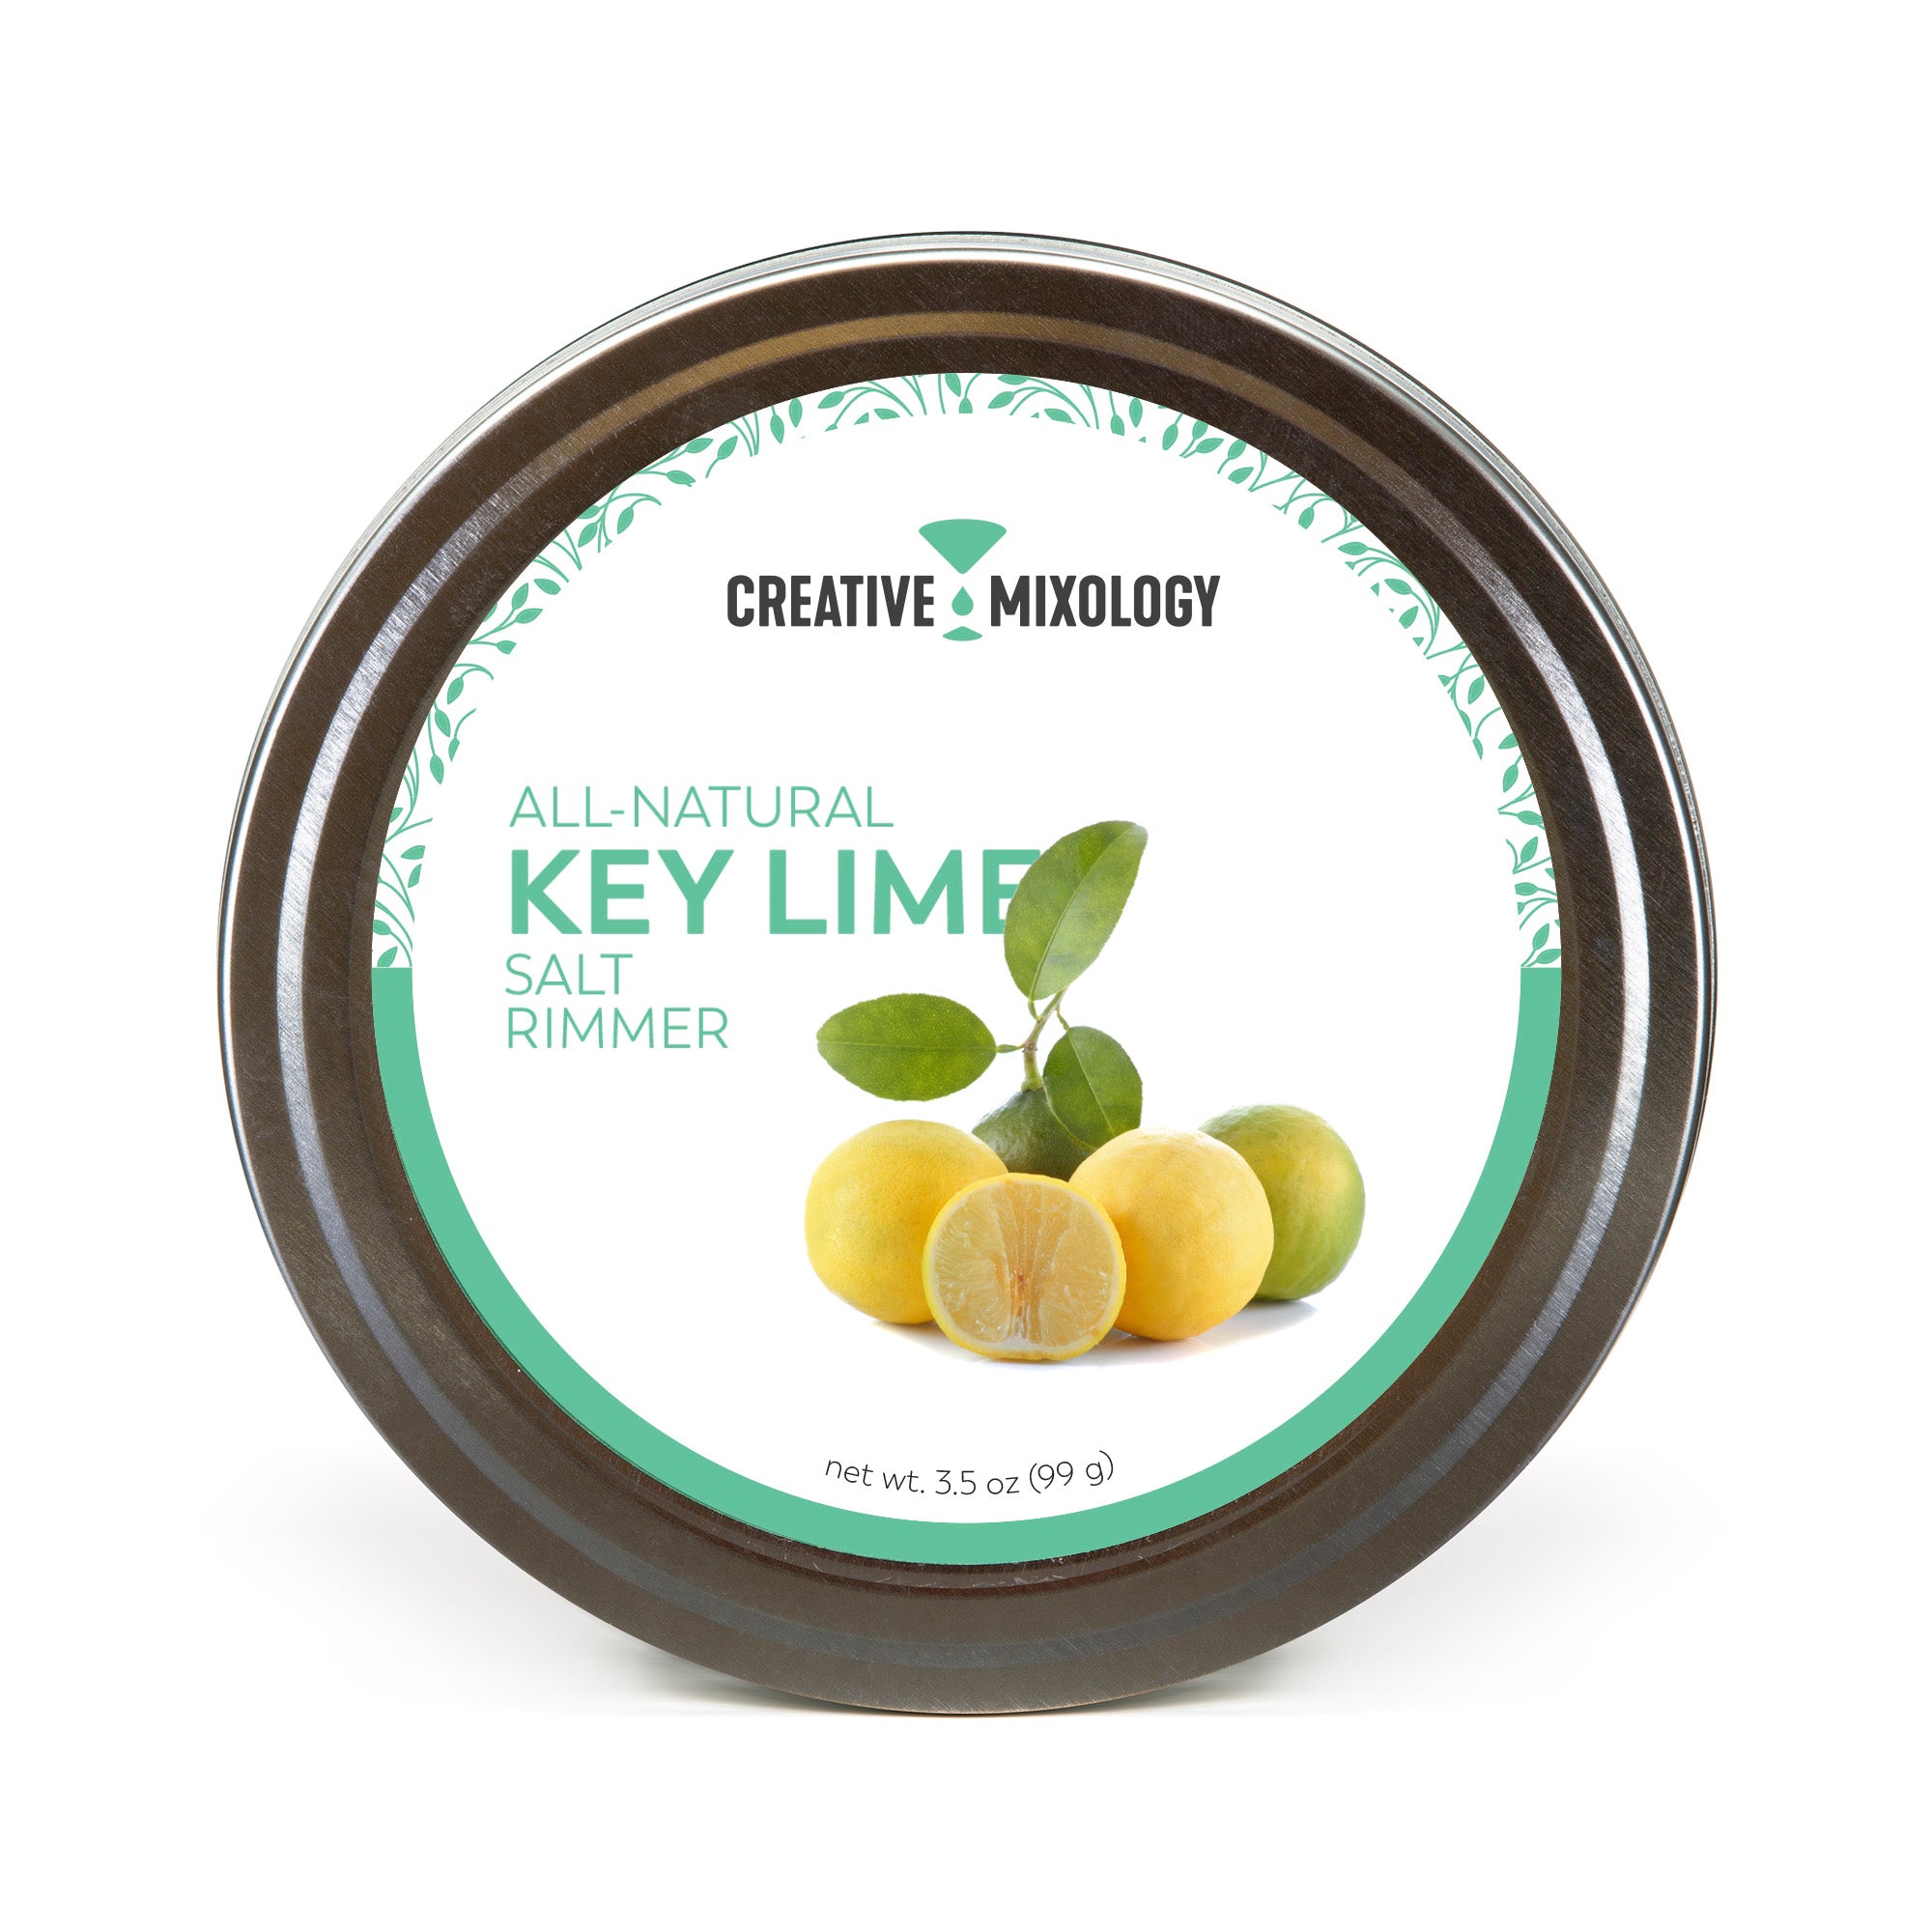 Key Lime Sour Cocktail Mixer: Pride Edition